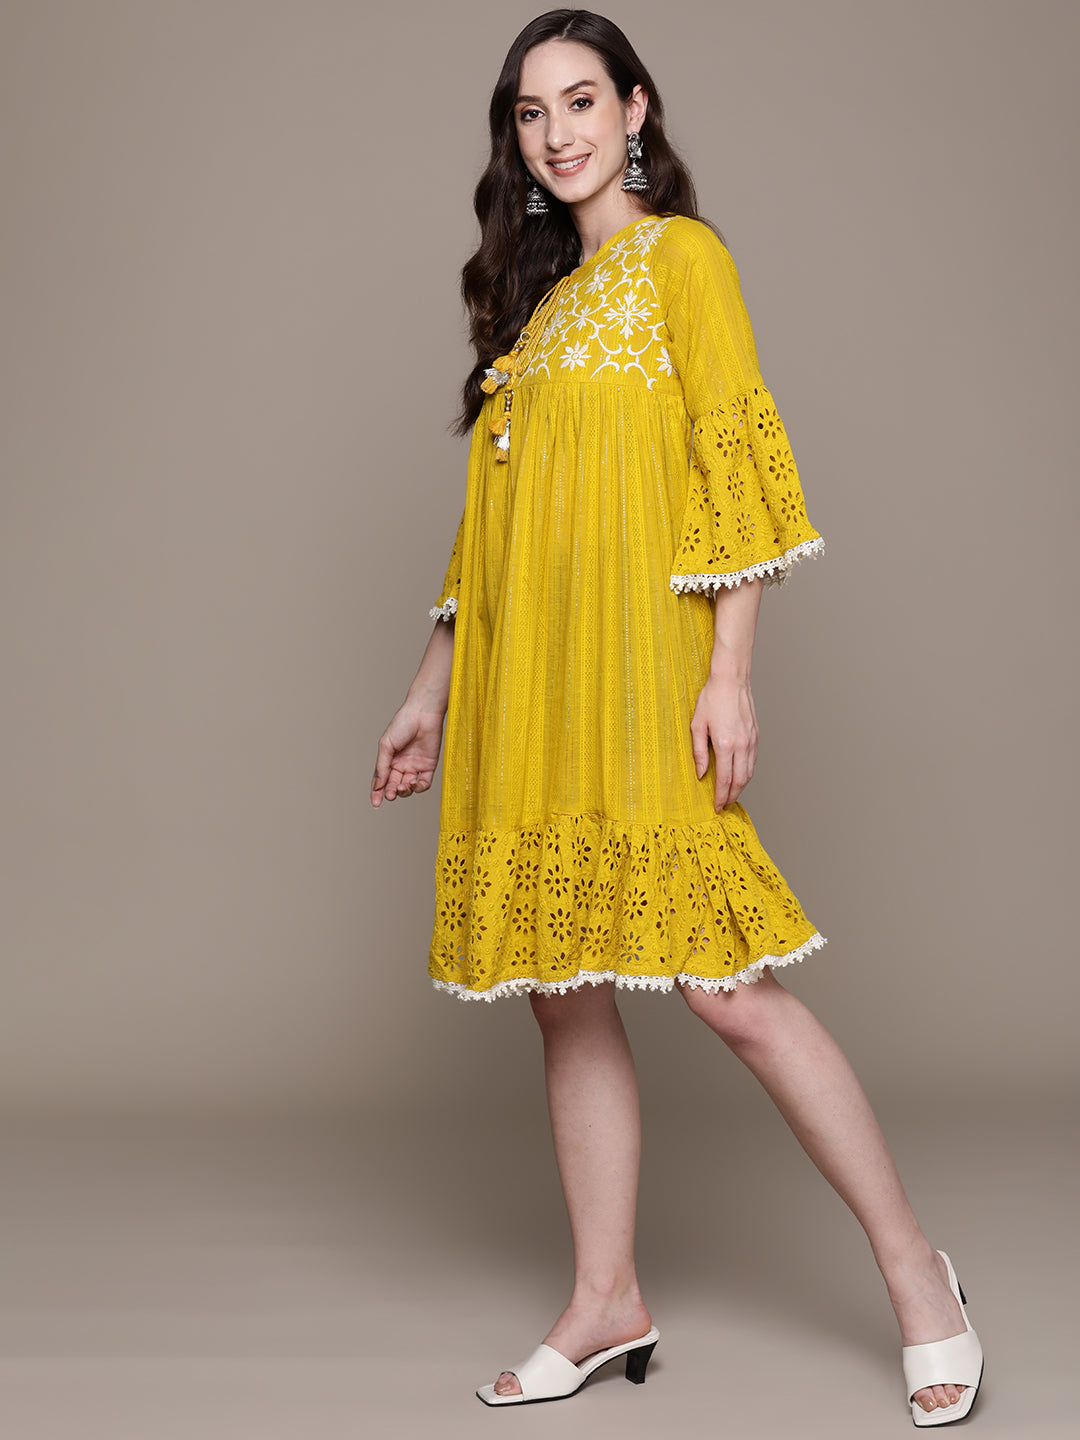 Ishin Women's Cotton Yellow Schiffli Embroidered A-Line Dress